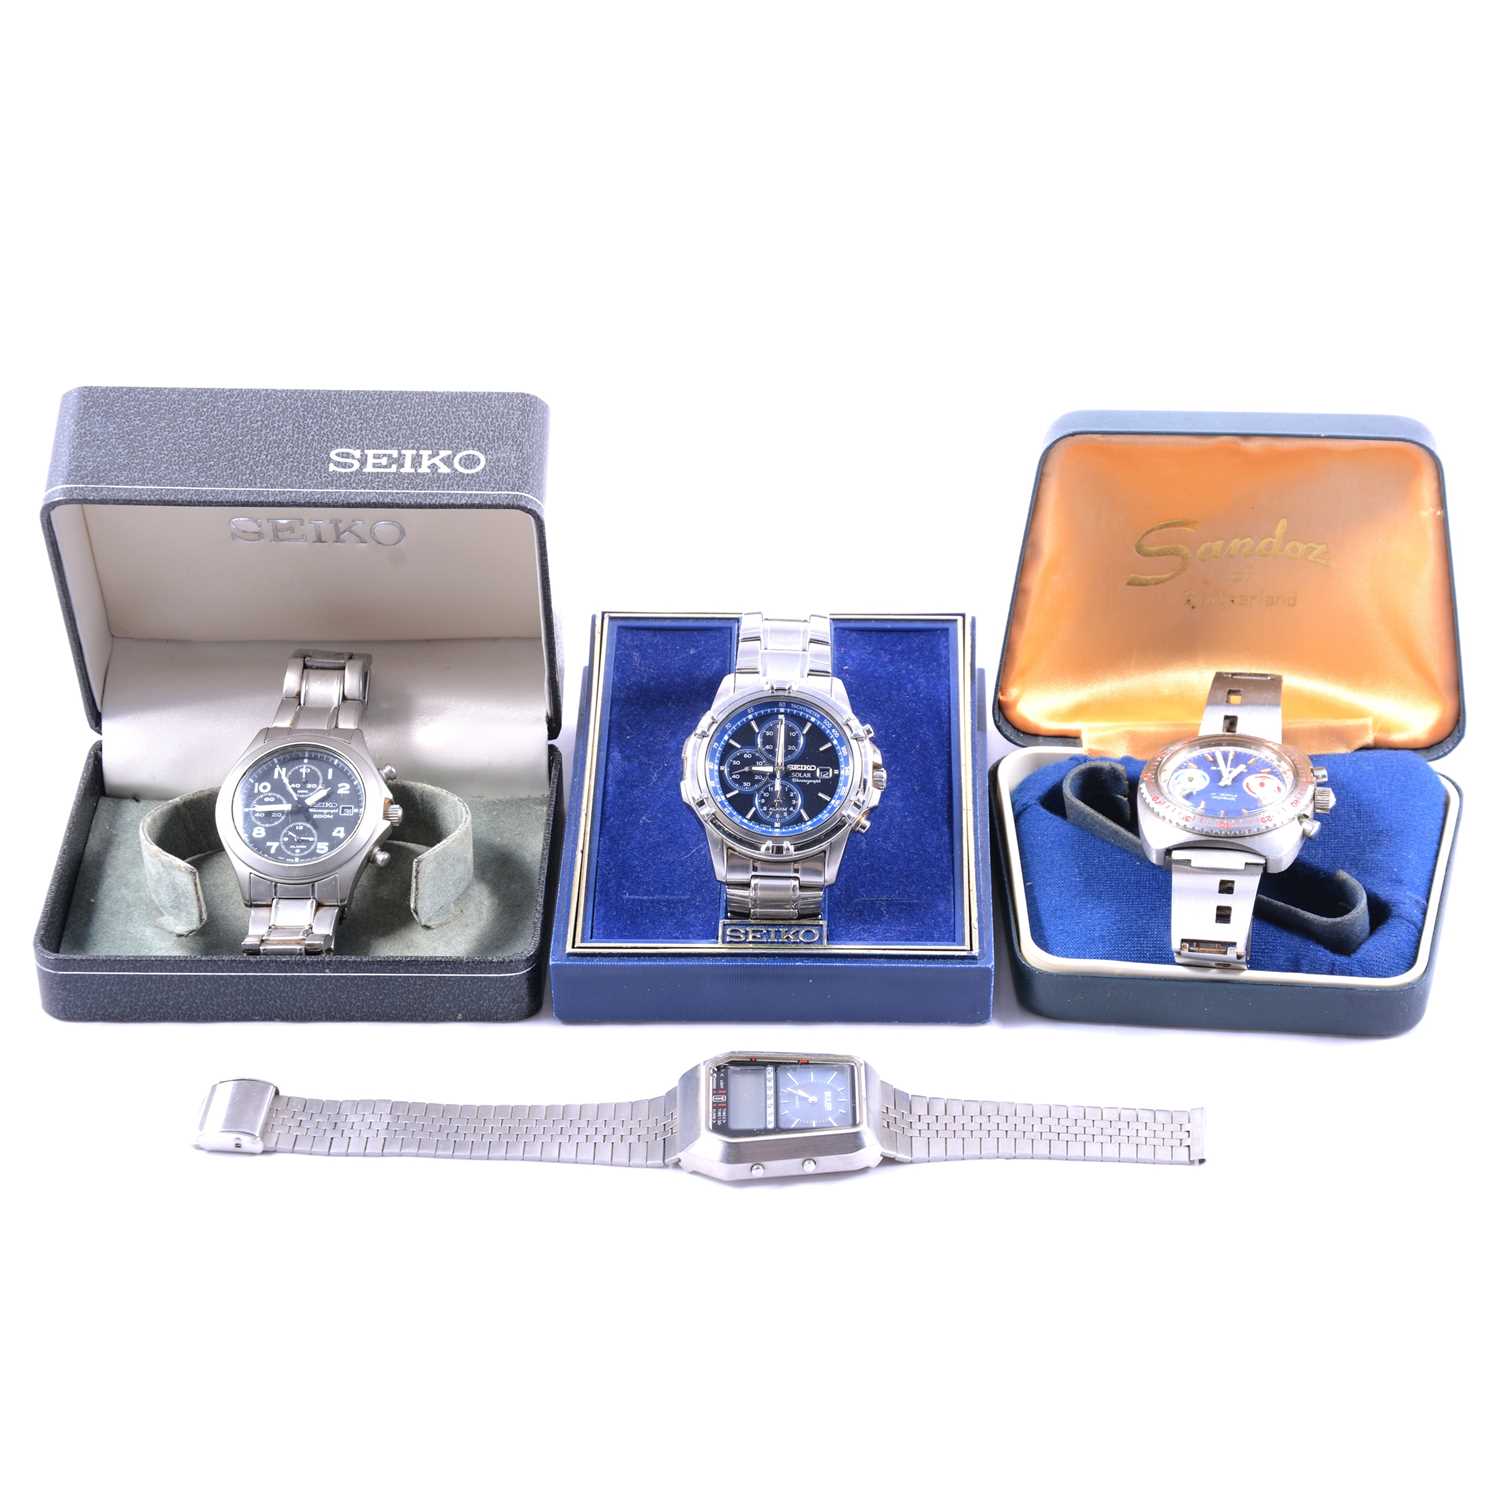 Two Seiko wristwatches, Sandoz watch and a Buler watch,